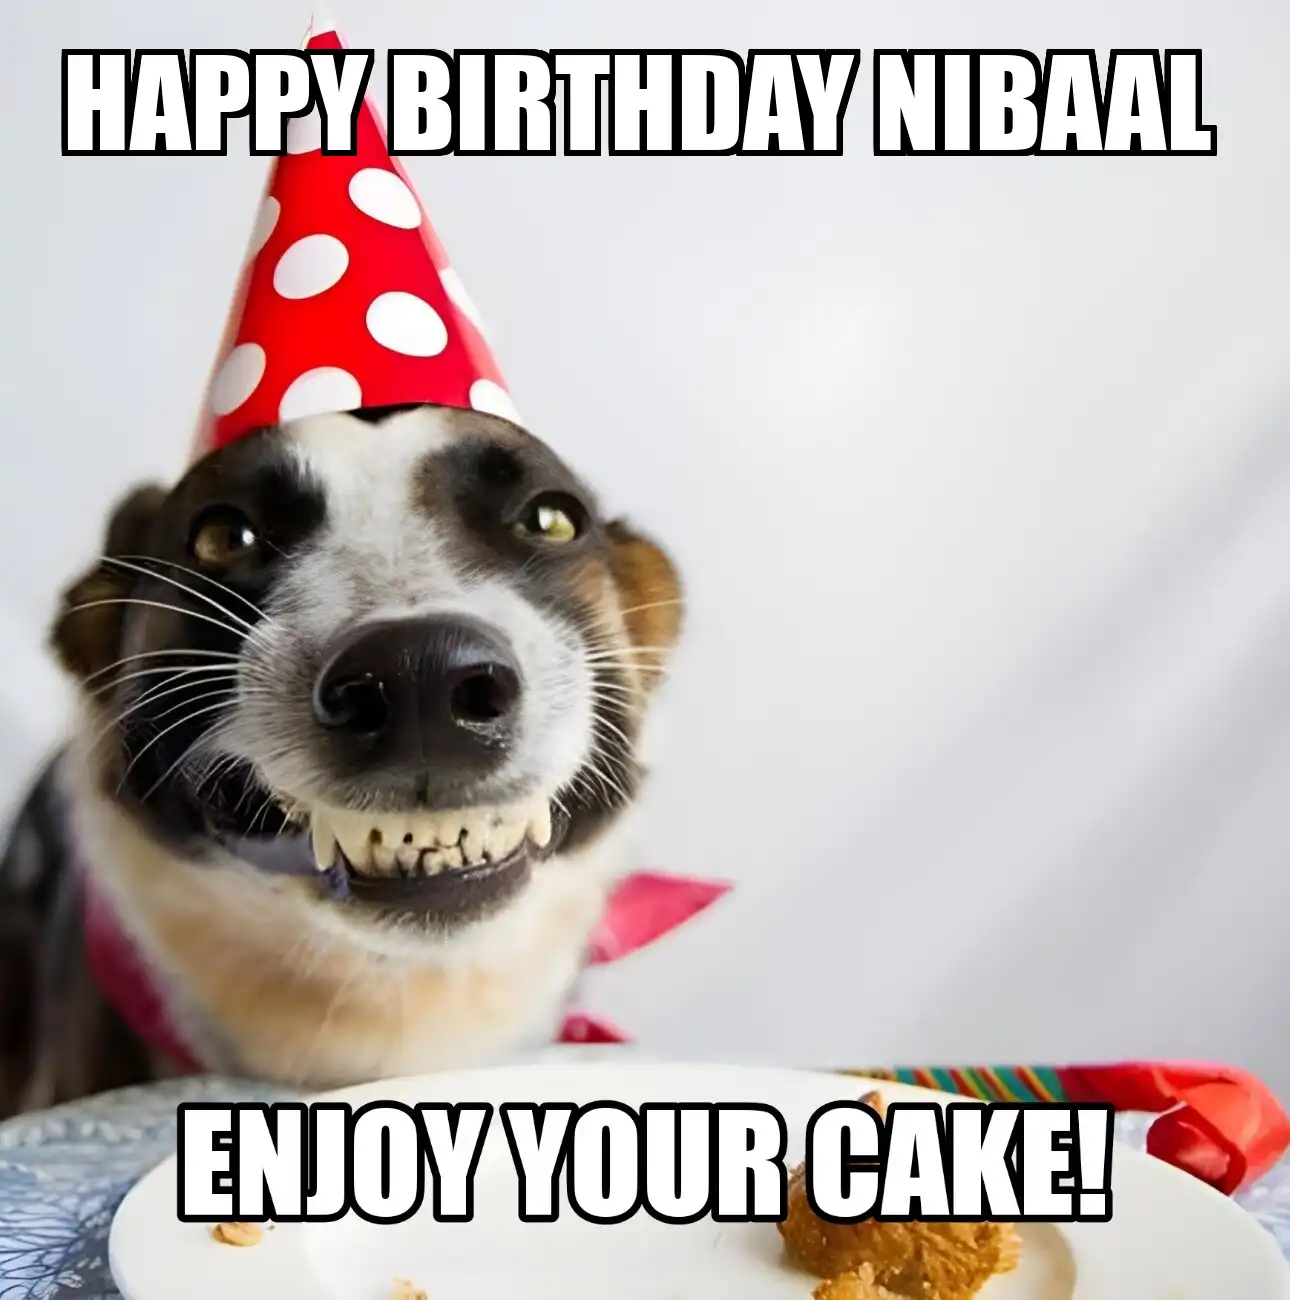 Happy Birthday Nibaal Enjoy Your Cake Dog Meme